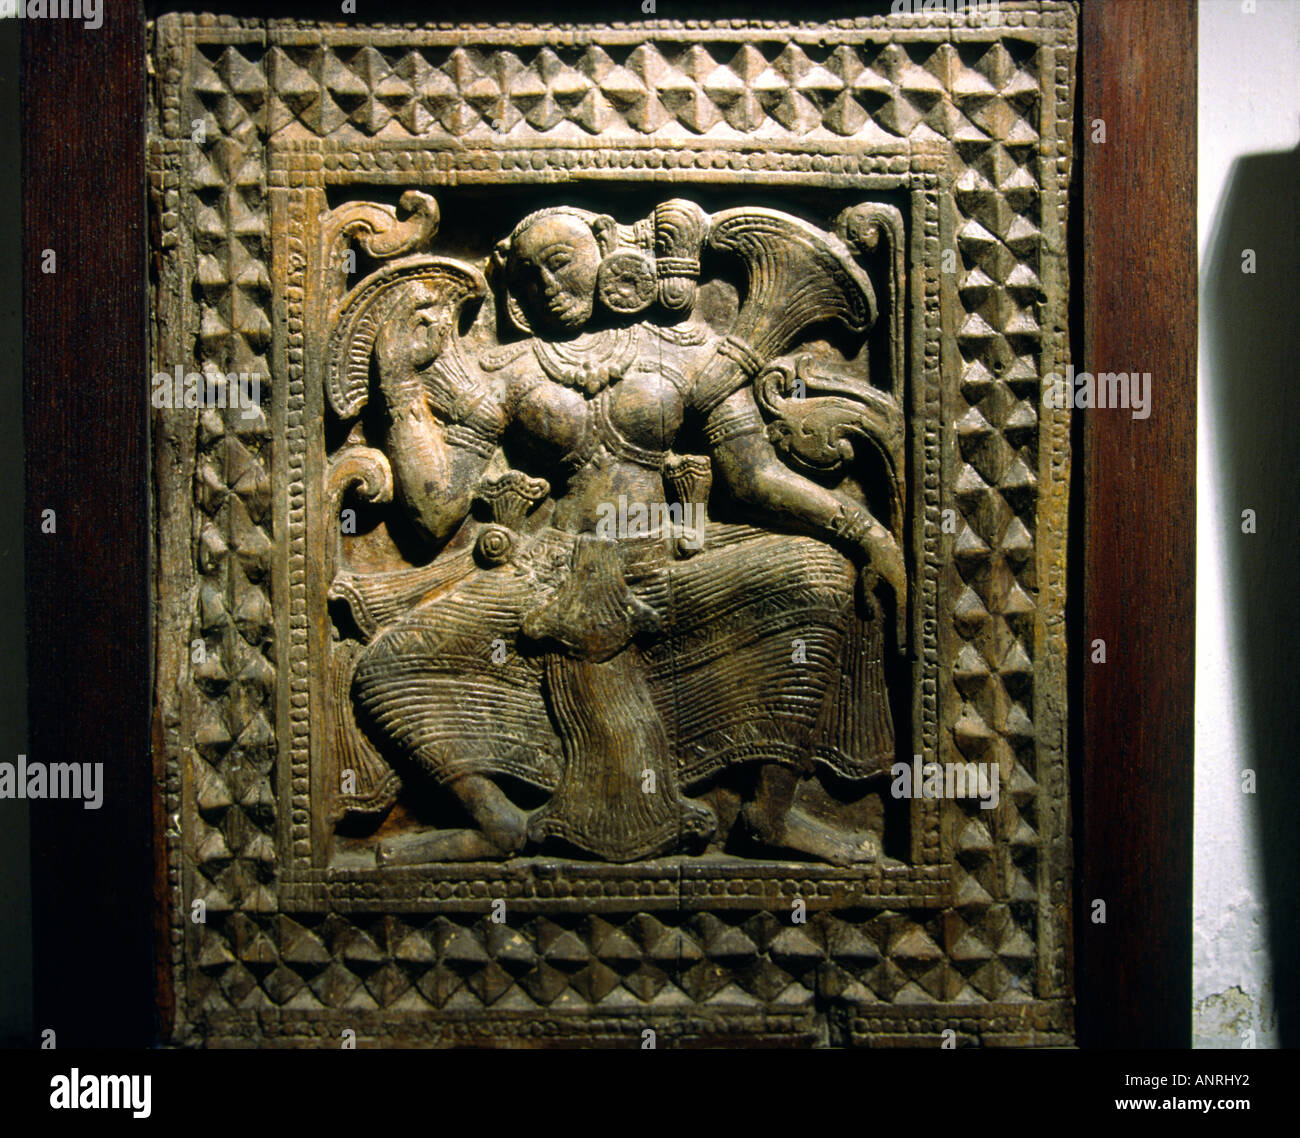 Sri Lanka Artigianato Embekke tempio vicino a Kandy xv secolo tempio carving ballerino Foto Stock